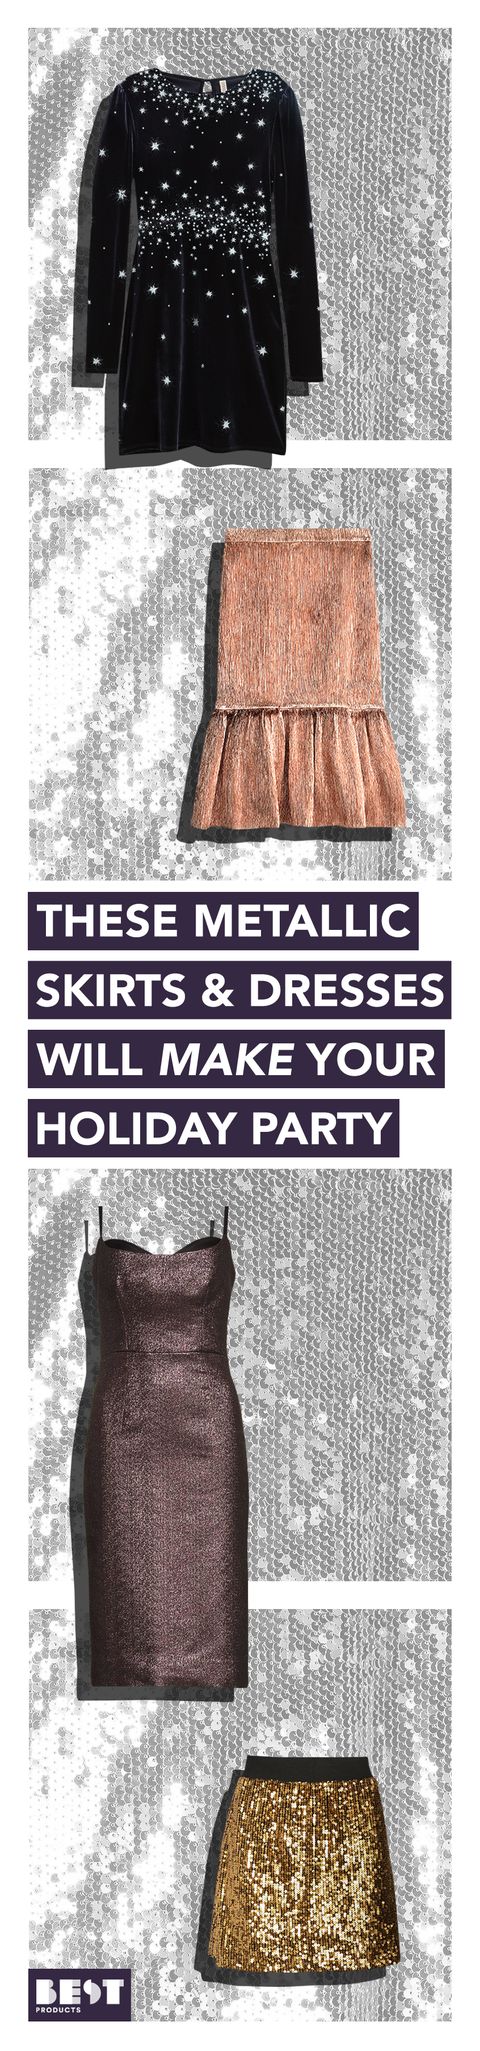 metallic skirts dresses